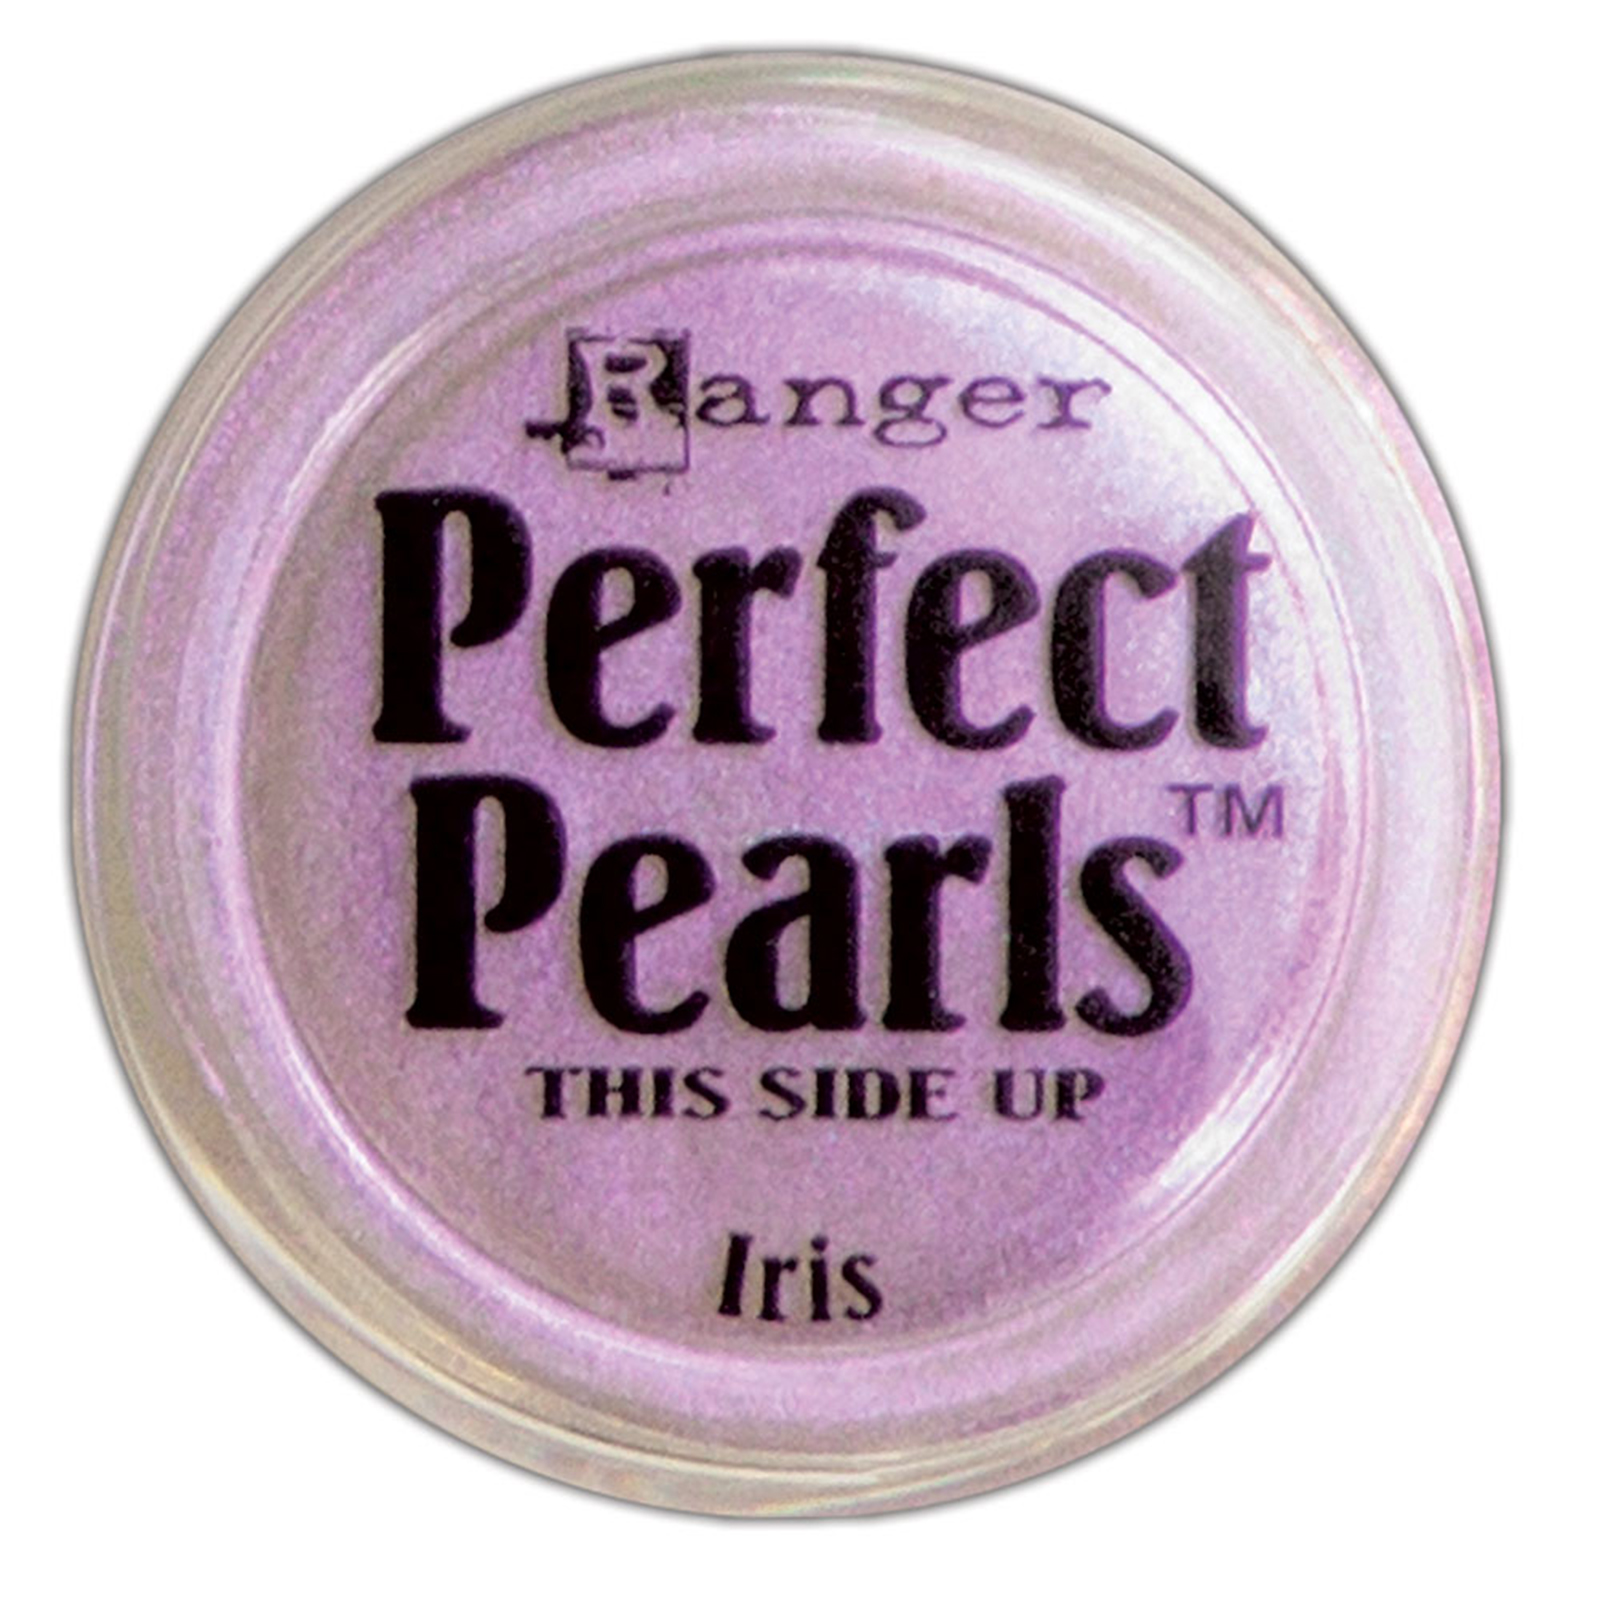 Ranger • Perfect pearls Pigment powder Iris